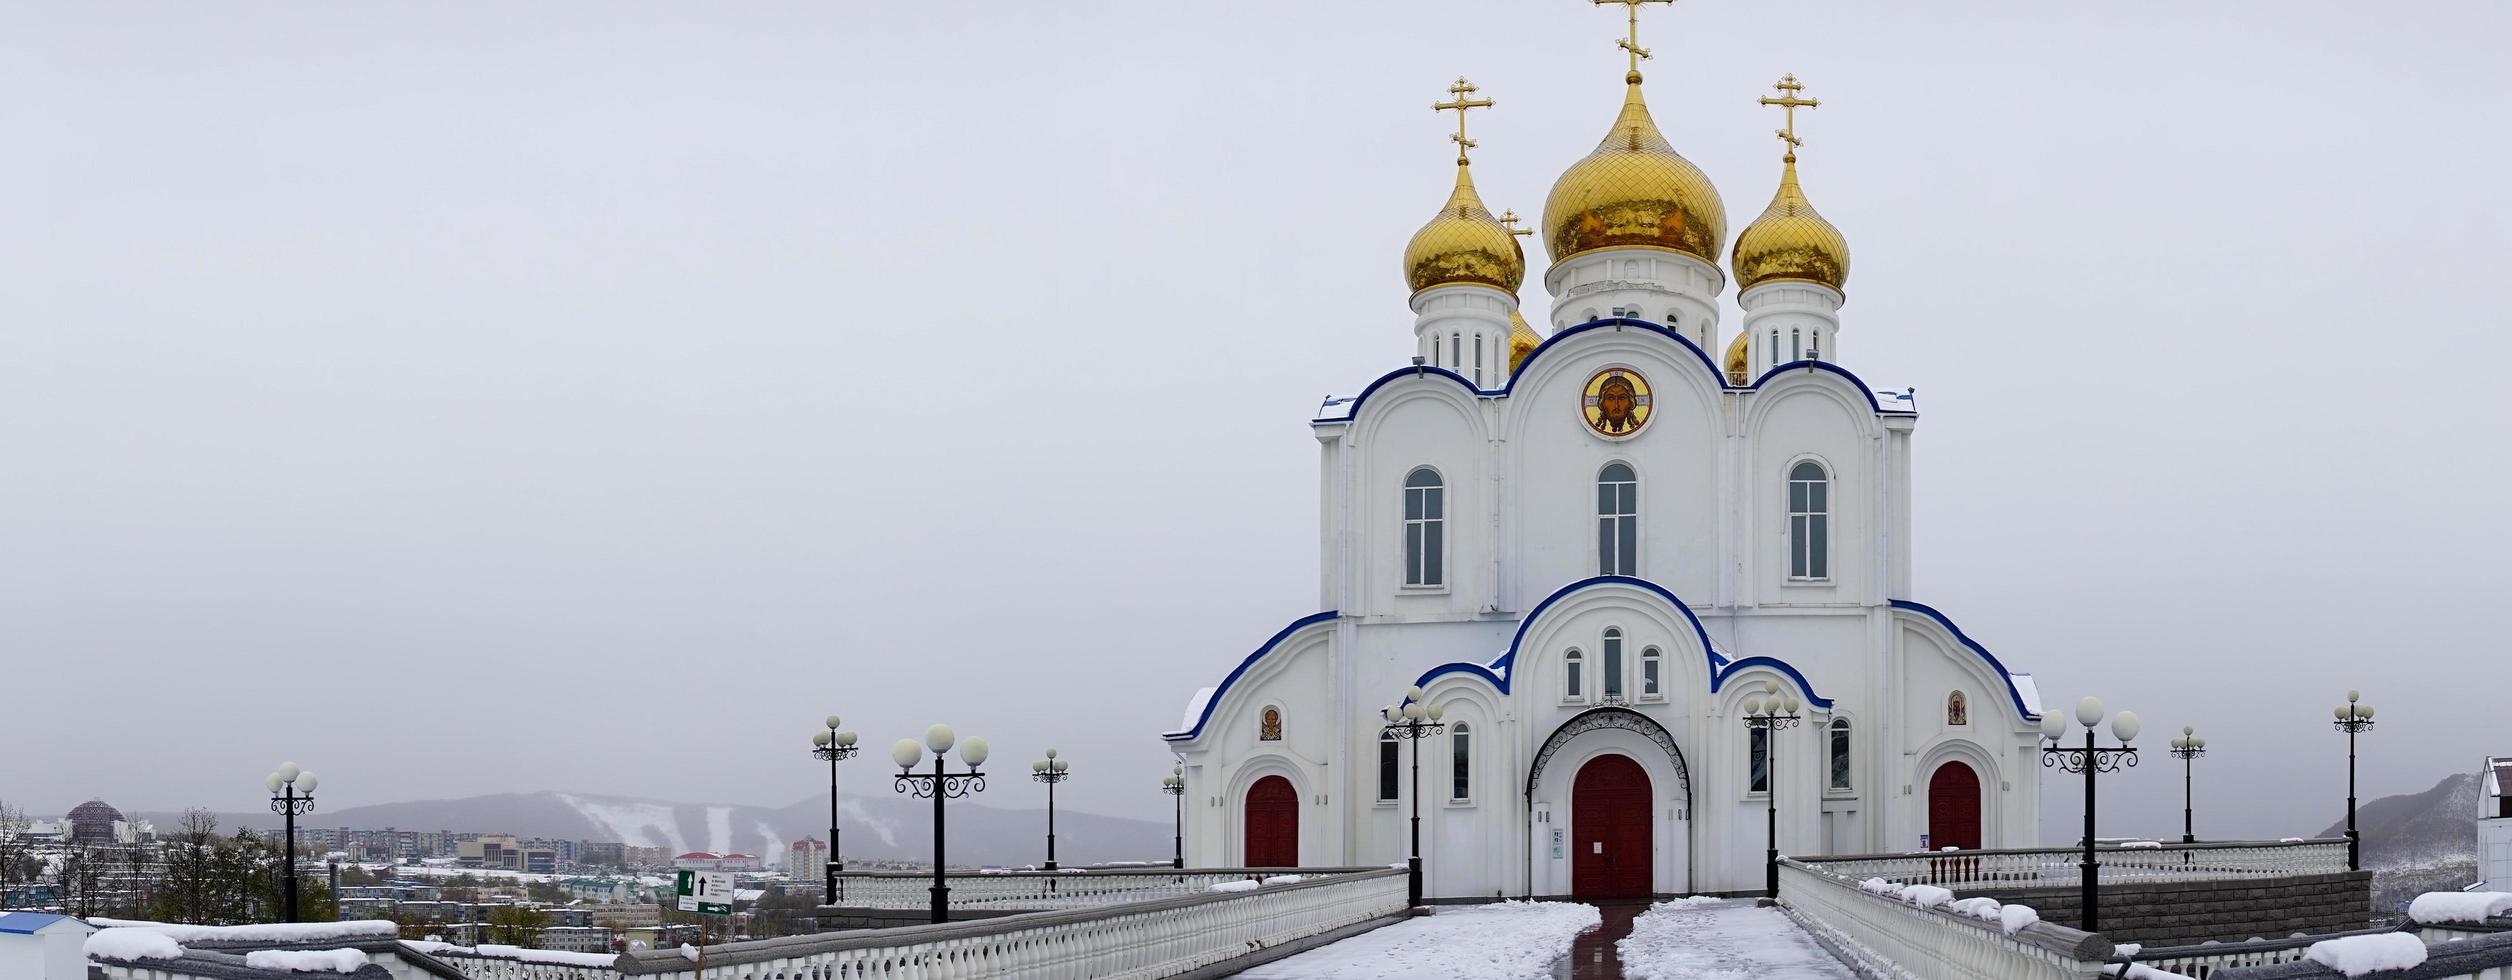 cattedrale ortodossa russa - petropavlovsk-kamchatsky, russia foto